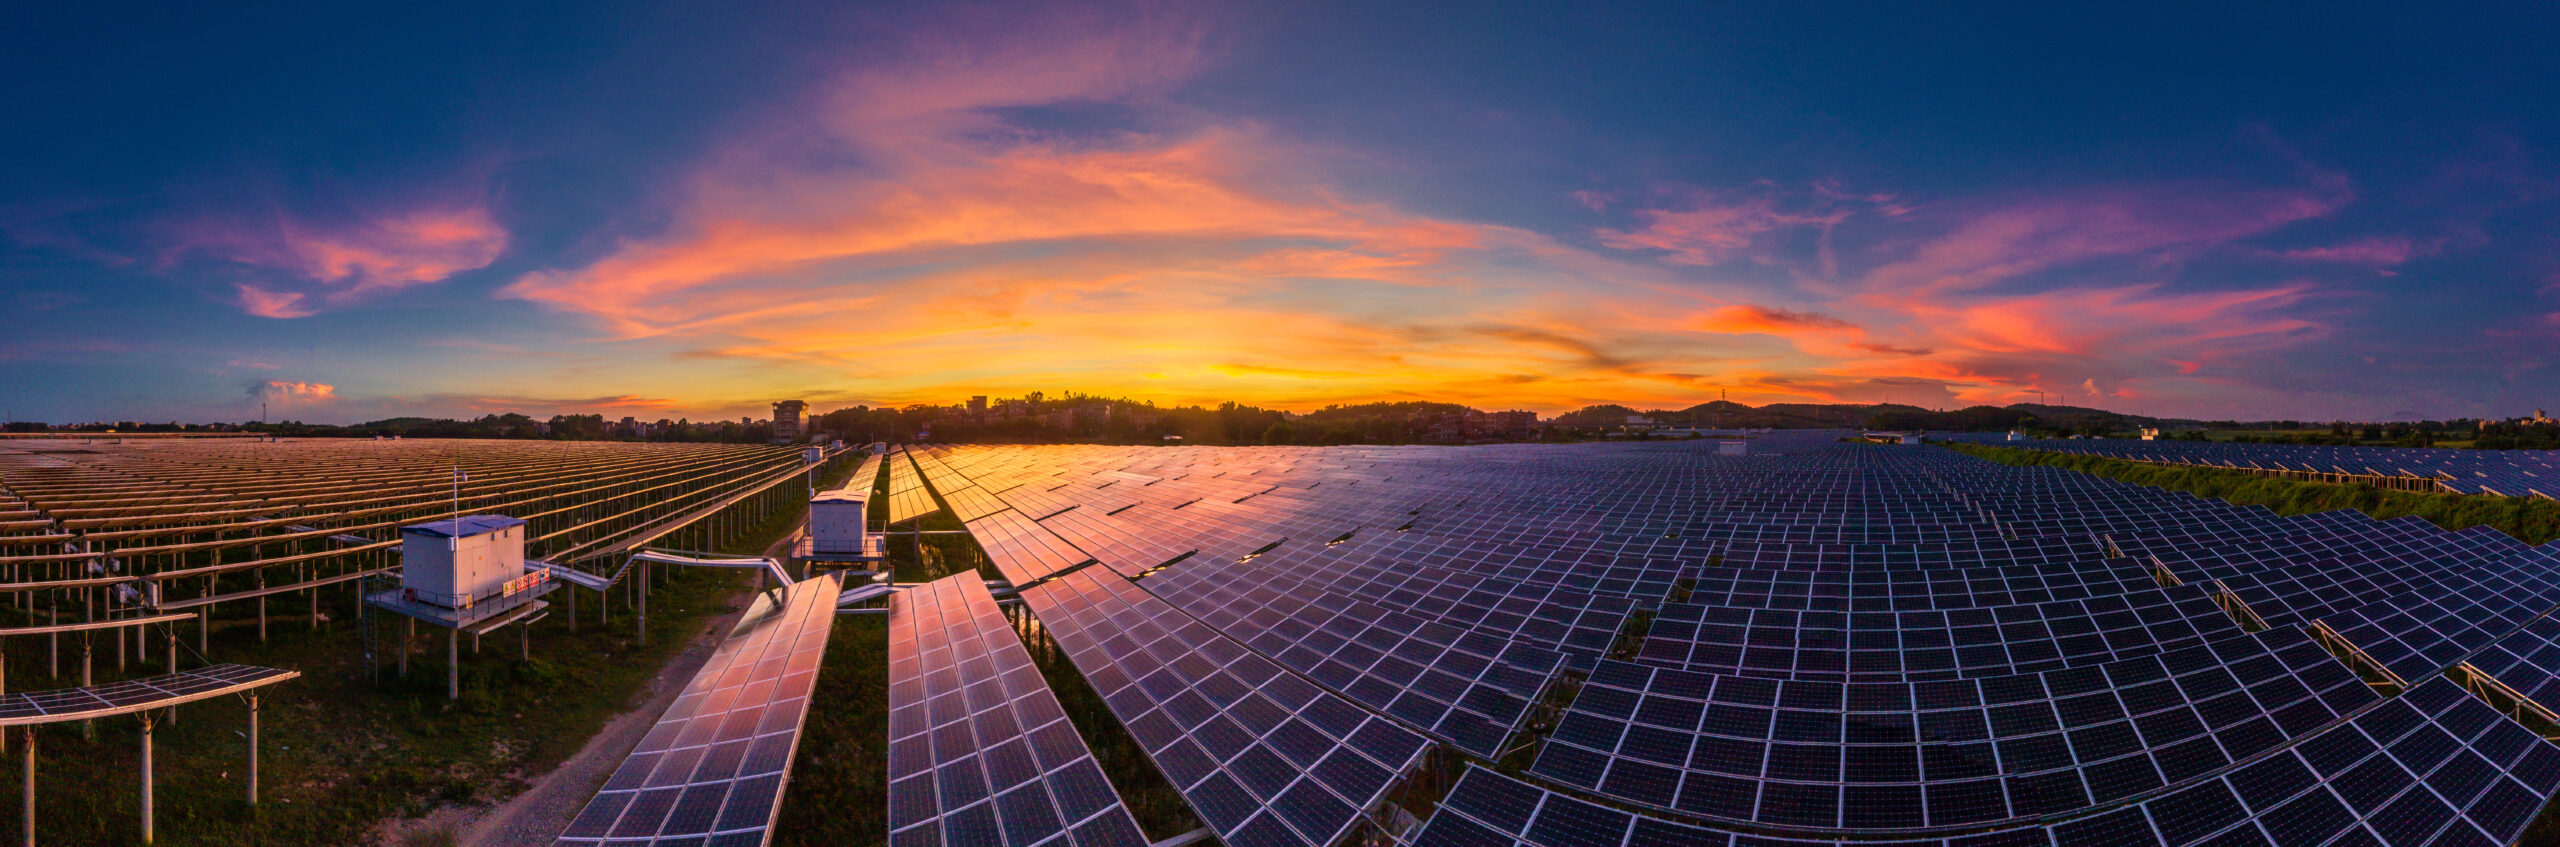 Solar Plant on Sunset